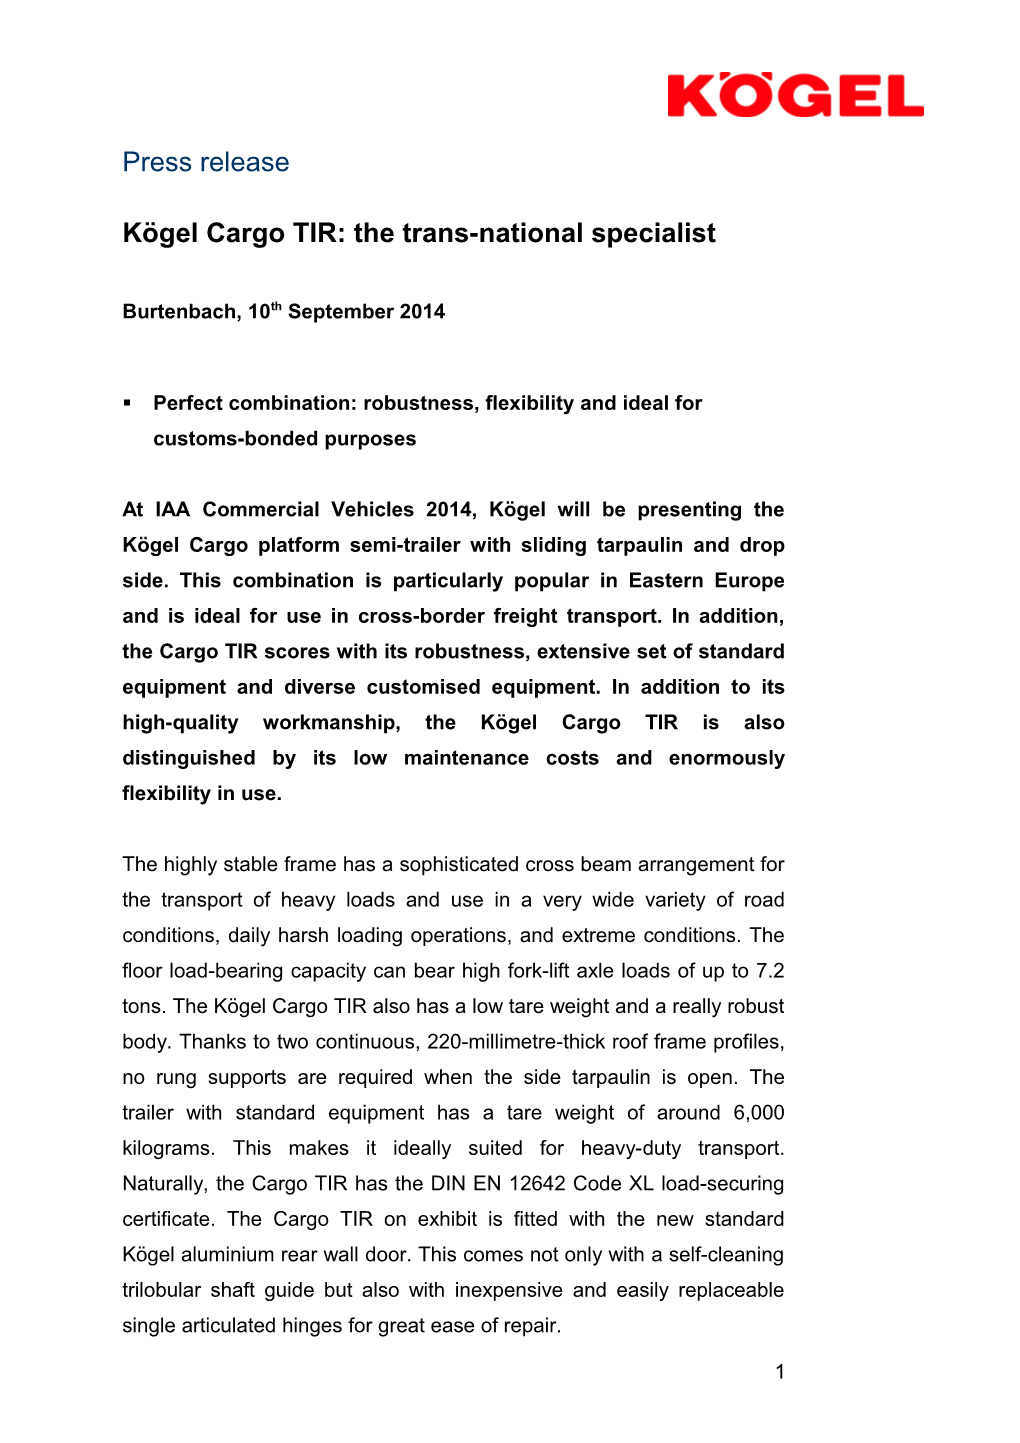 Kögel Cargo TIR: the Trans-National Specialist